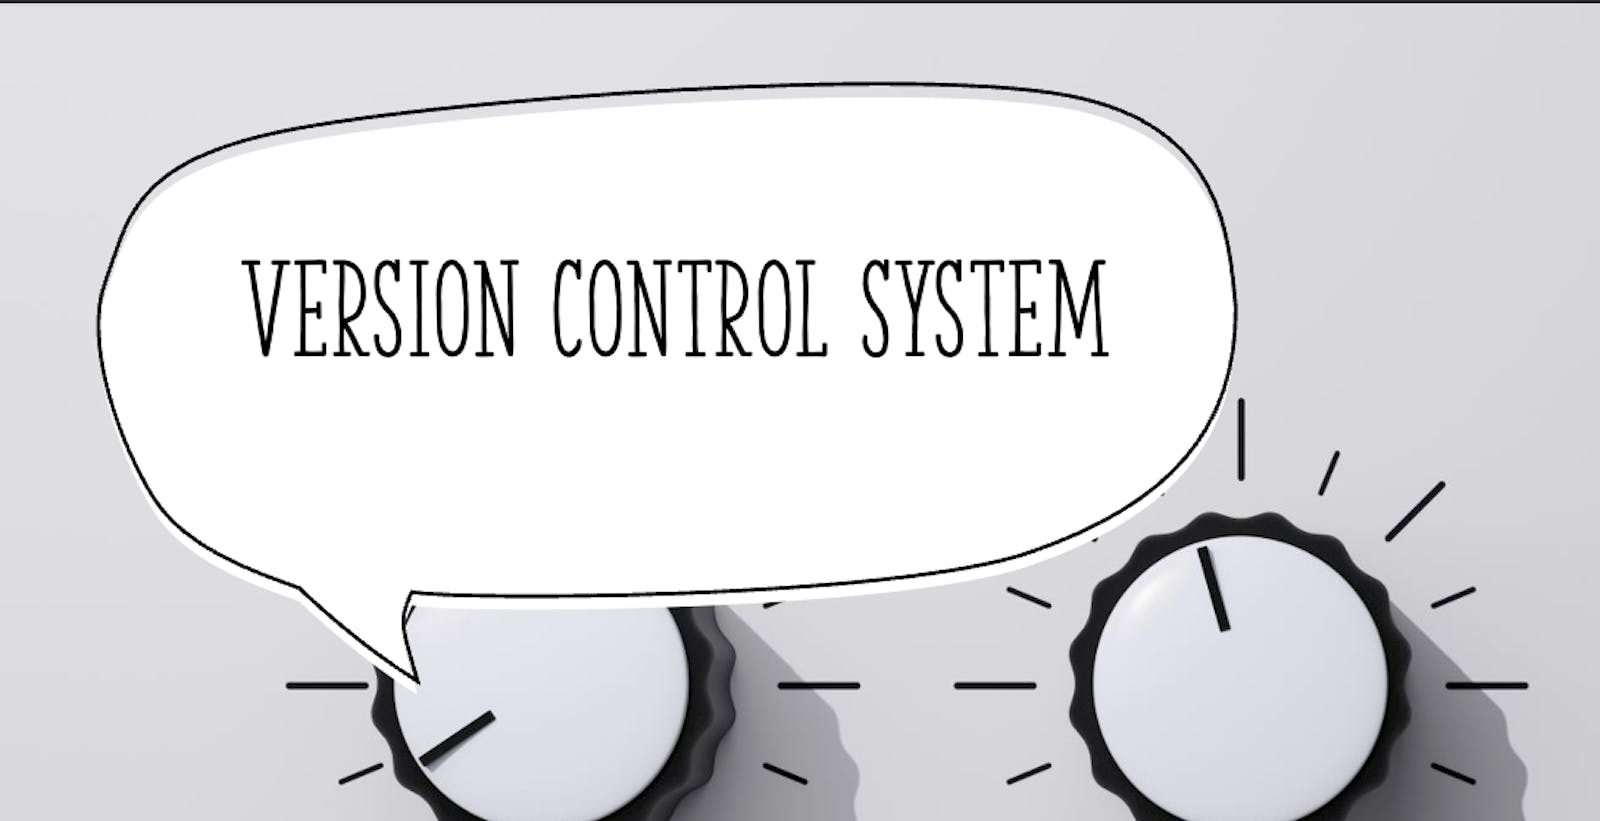 Version control system